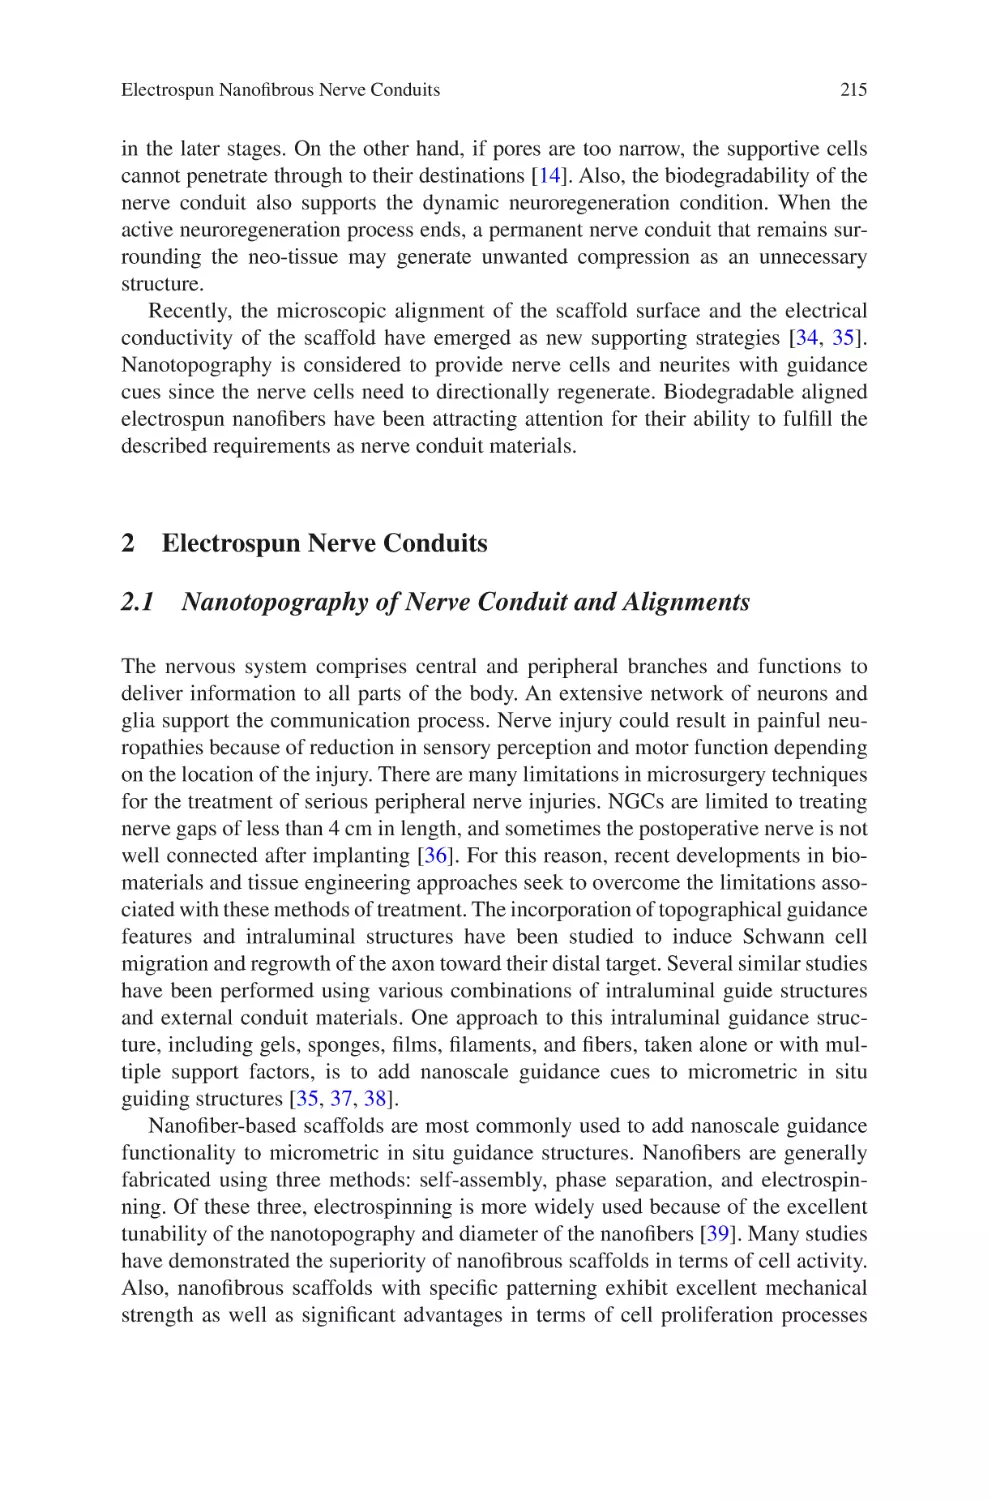 2 Electrospun Nerve Conduits
2.1 Nanotopography of Nerve Conduit and Alignments